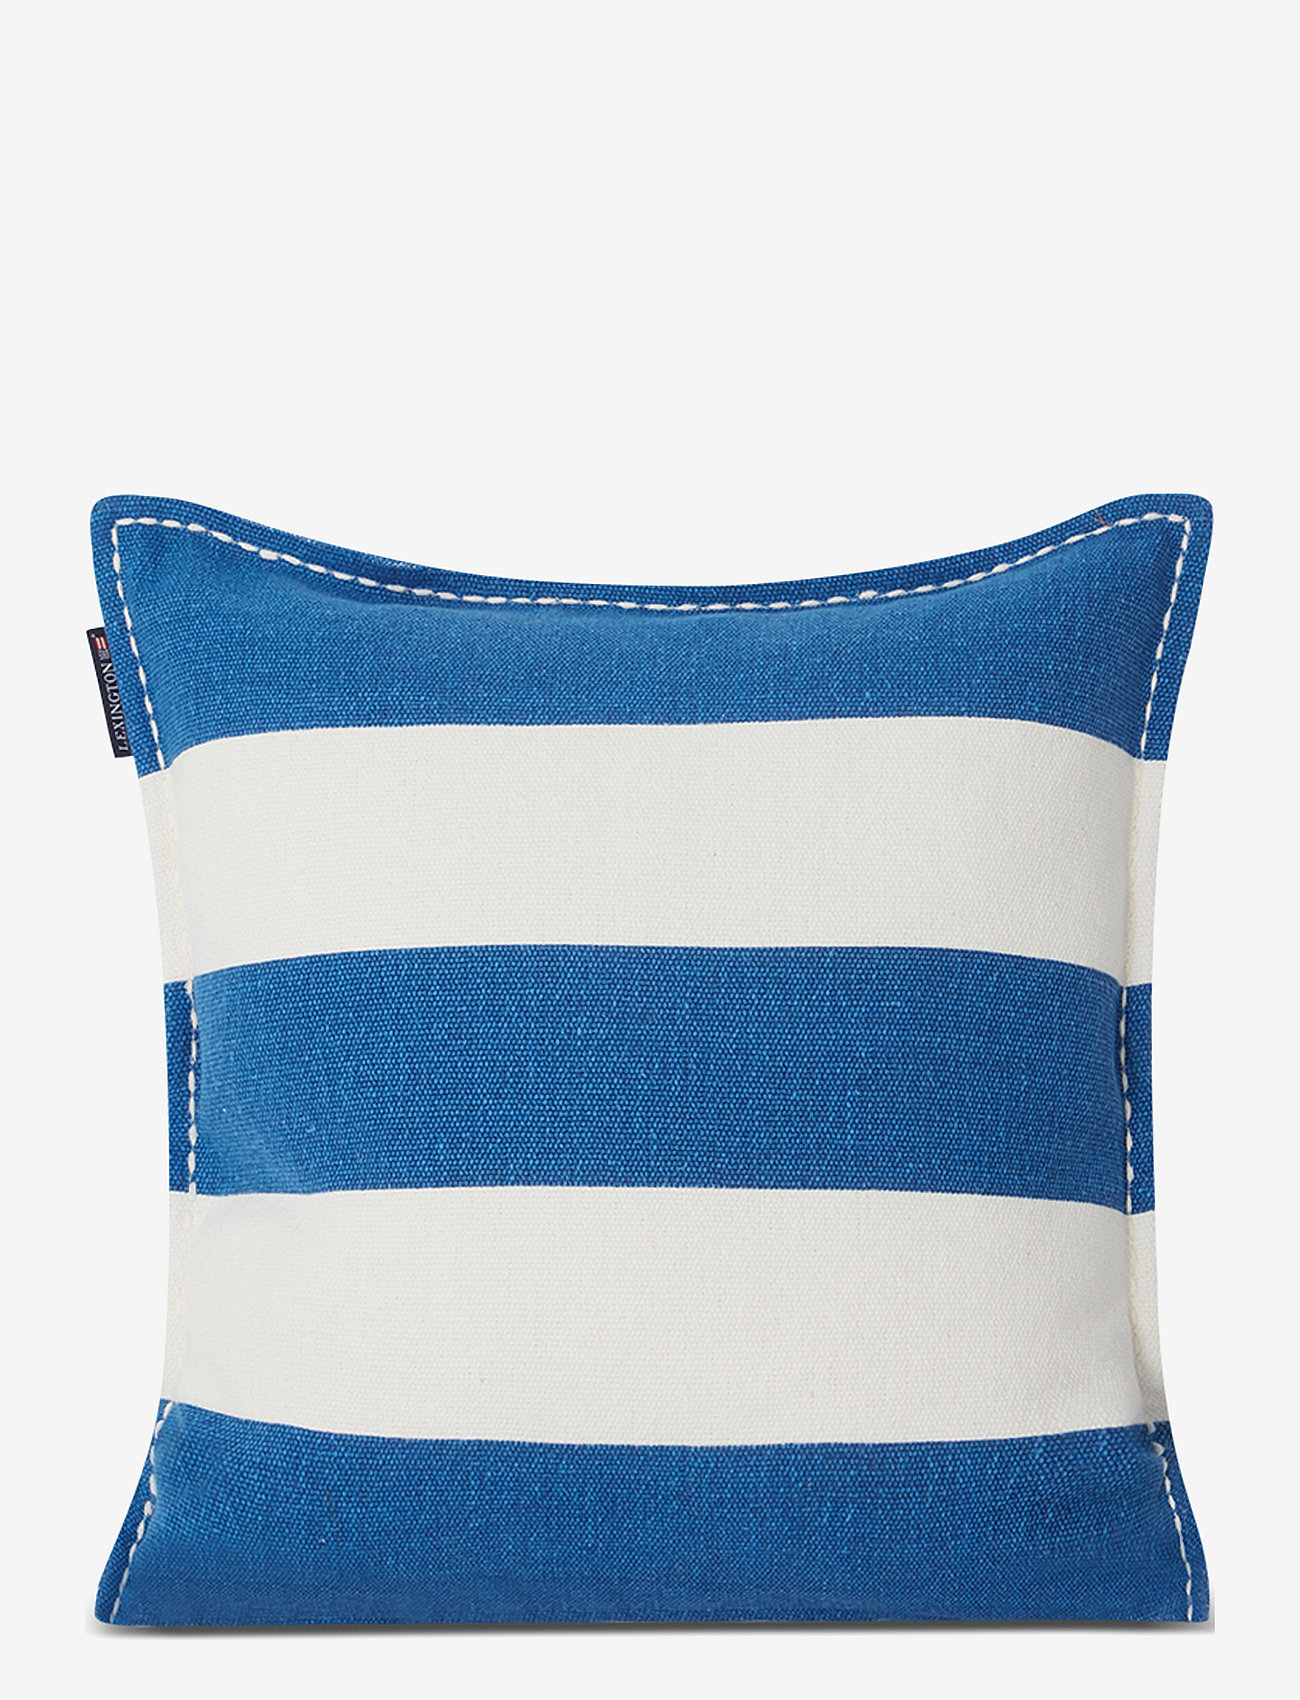 Lexington Home - Block Stripe Printed Recycled Cotton Pillow Cover - kussenhoezen - blue/white - 1